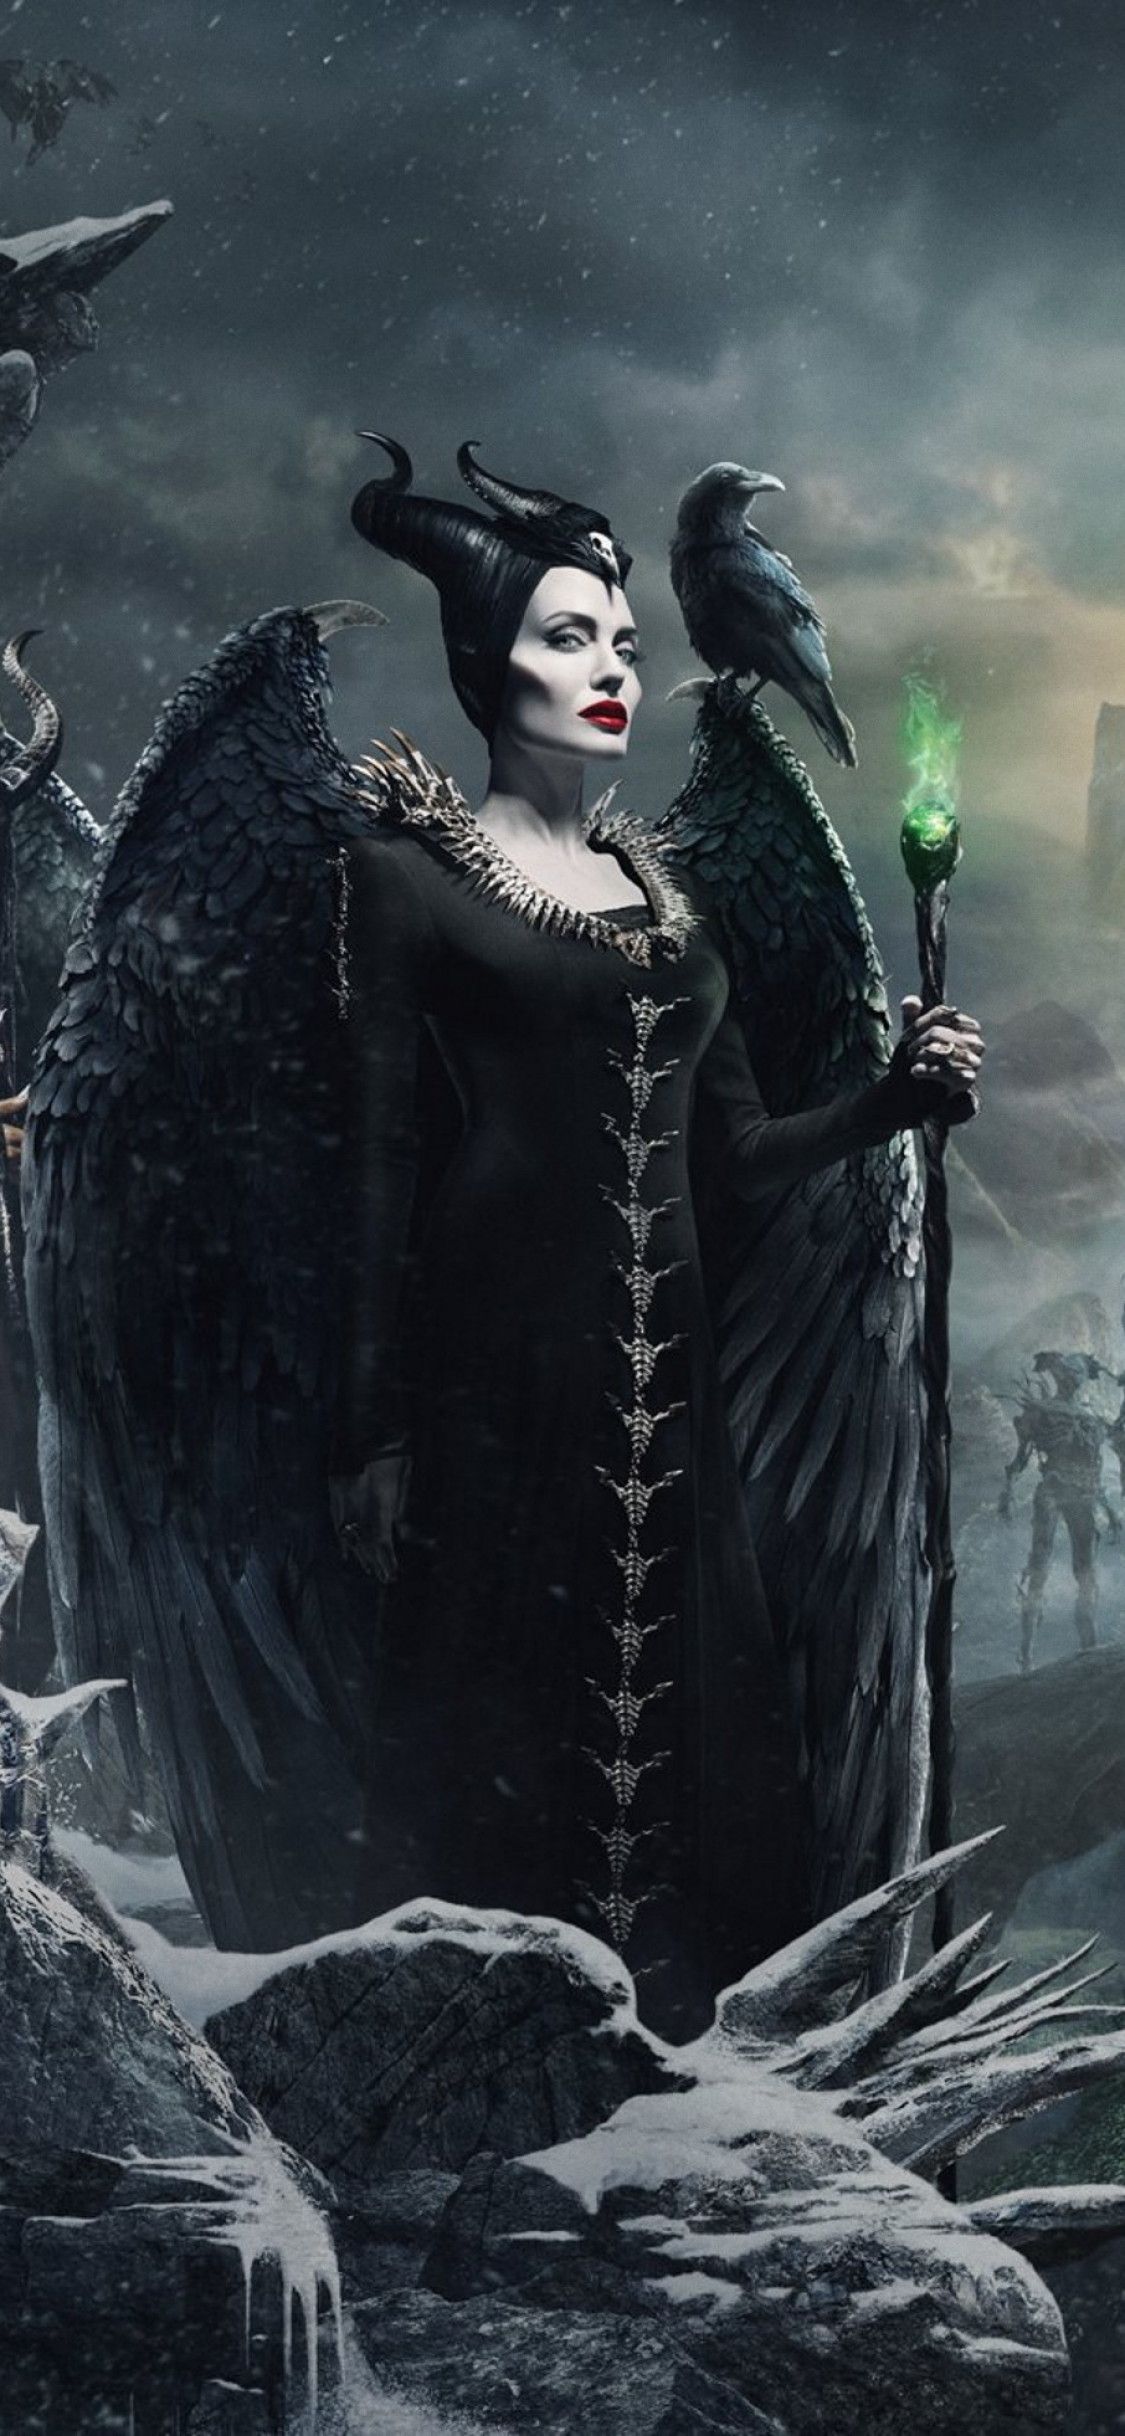 Maleficent Mistress Of Evil 4k New iPhone XS, iPhone 10